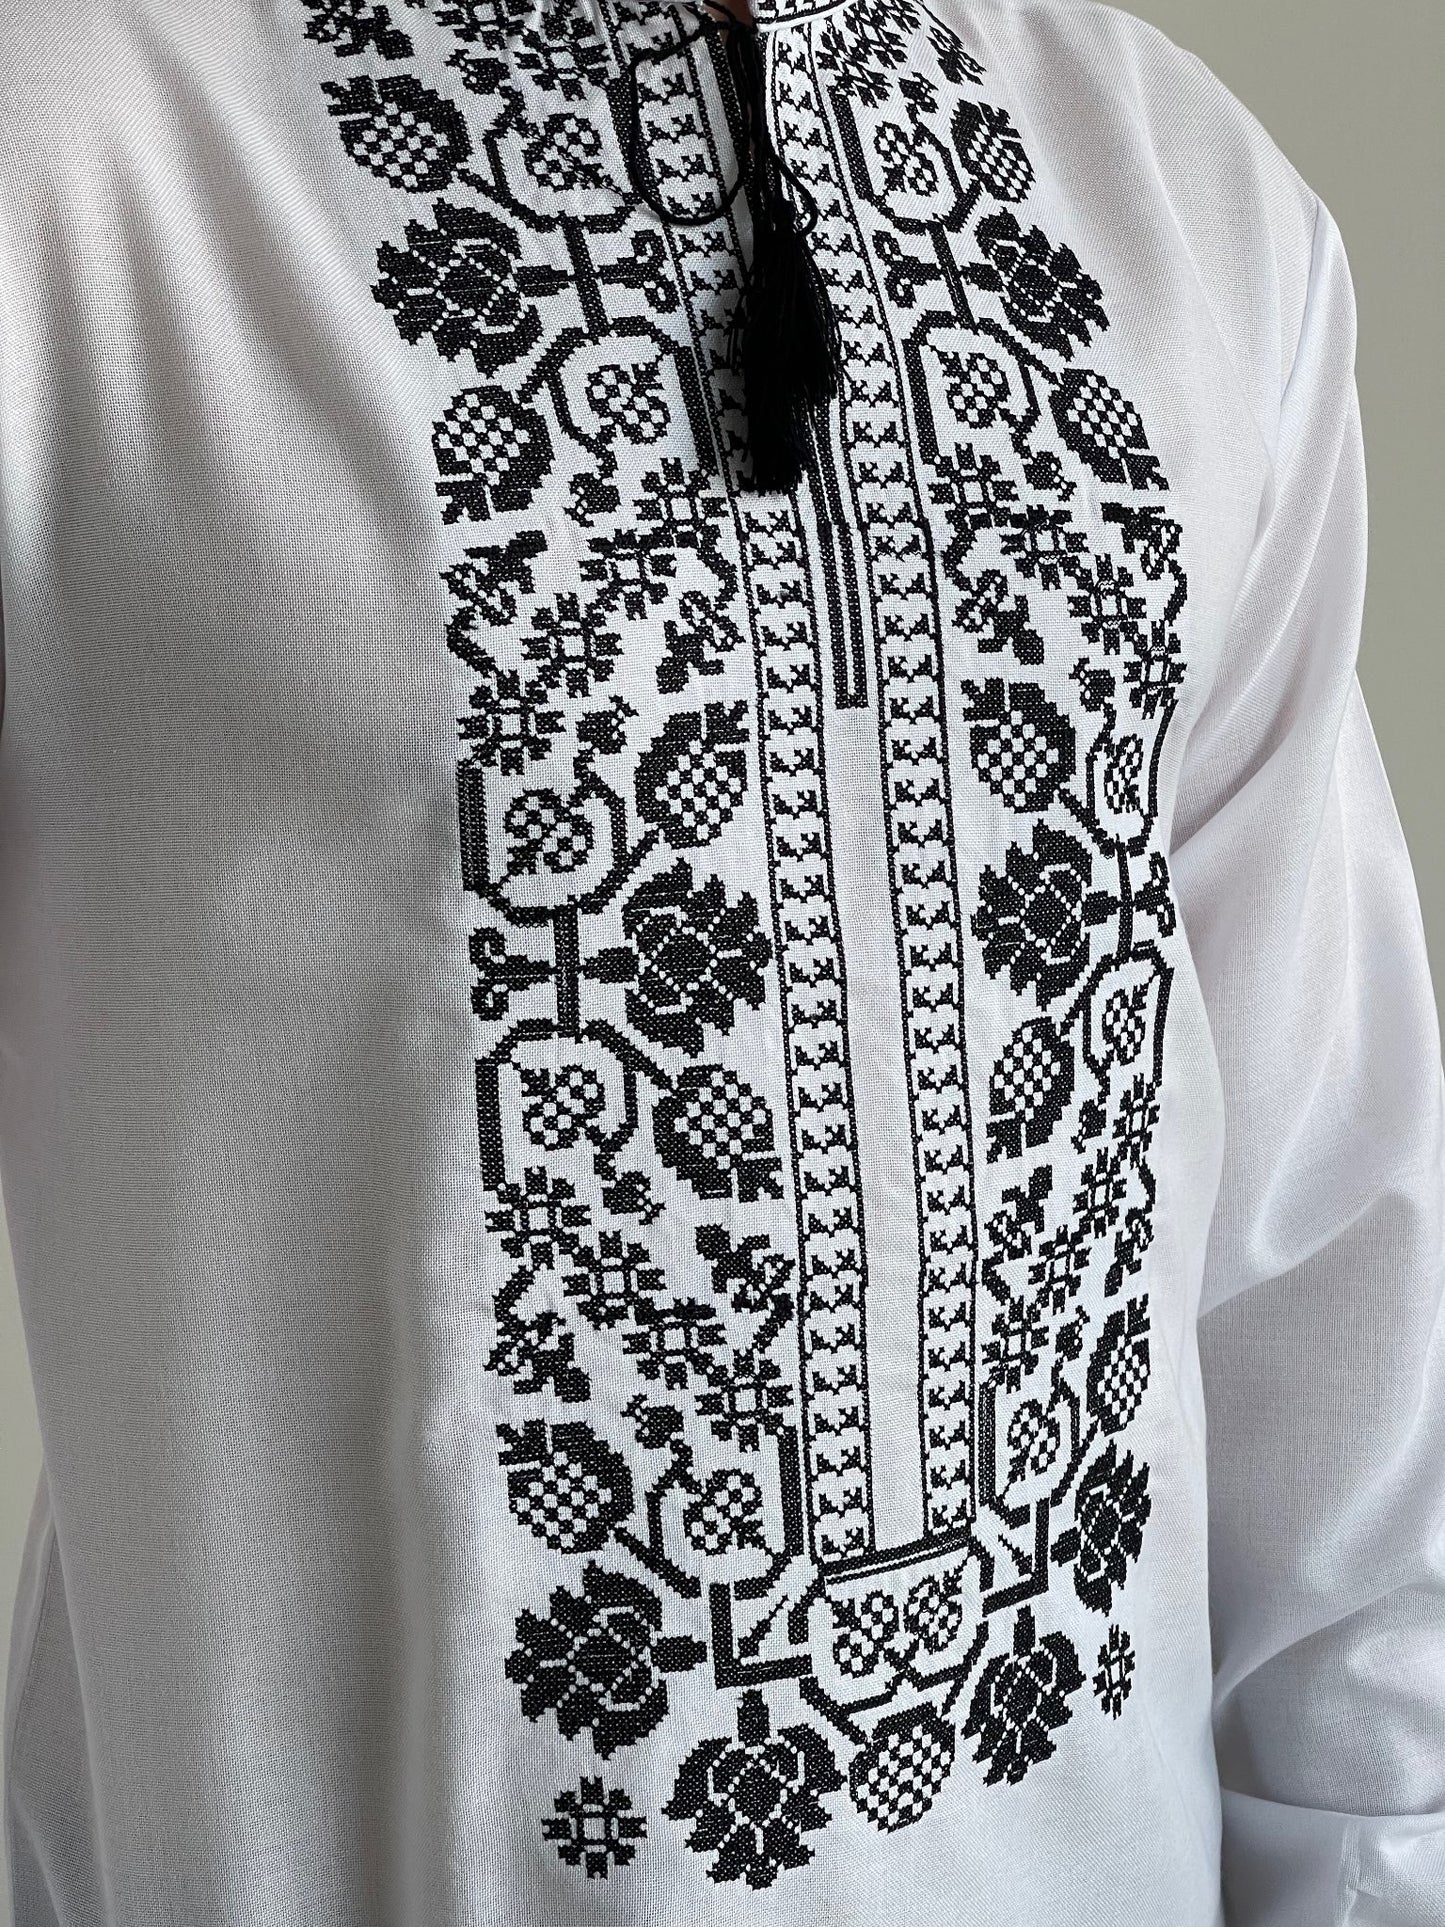 White Long Sleeve Men's Vyshyvanka with Black Embroidery